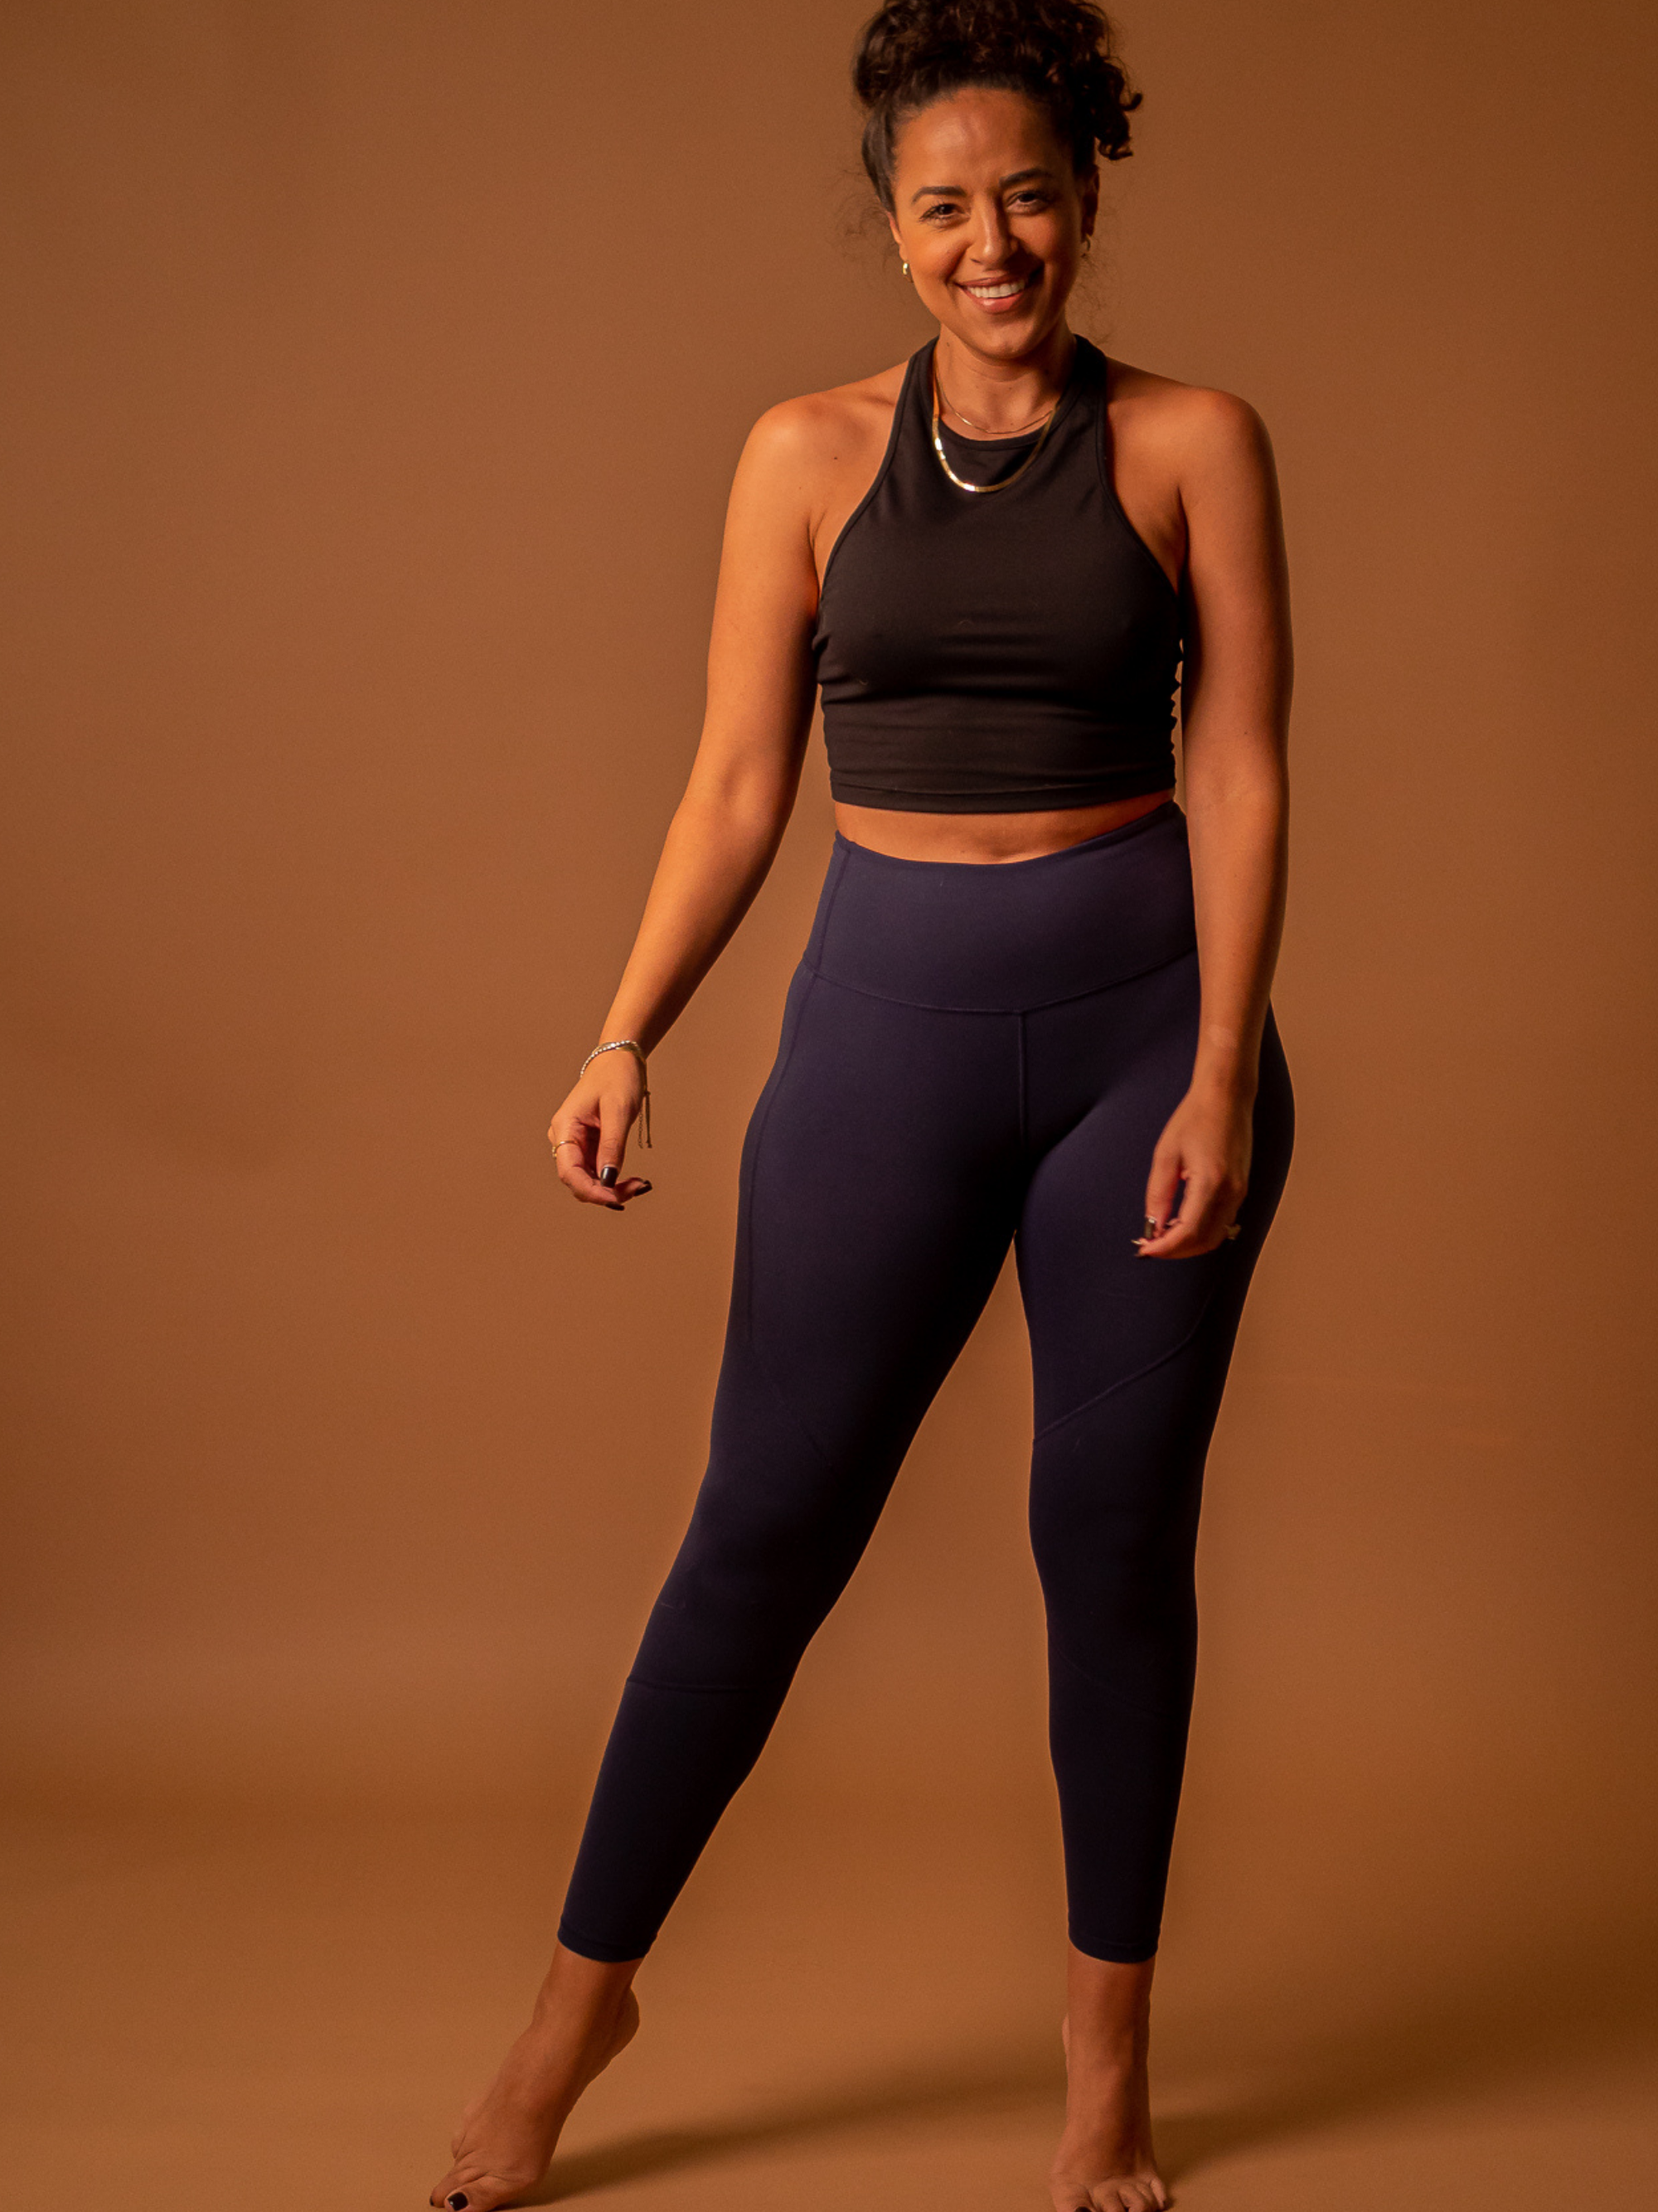 Buy buttR Yoga Pants for Women  Recycled Activewear – Kosha Yoga Co.